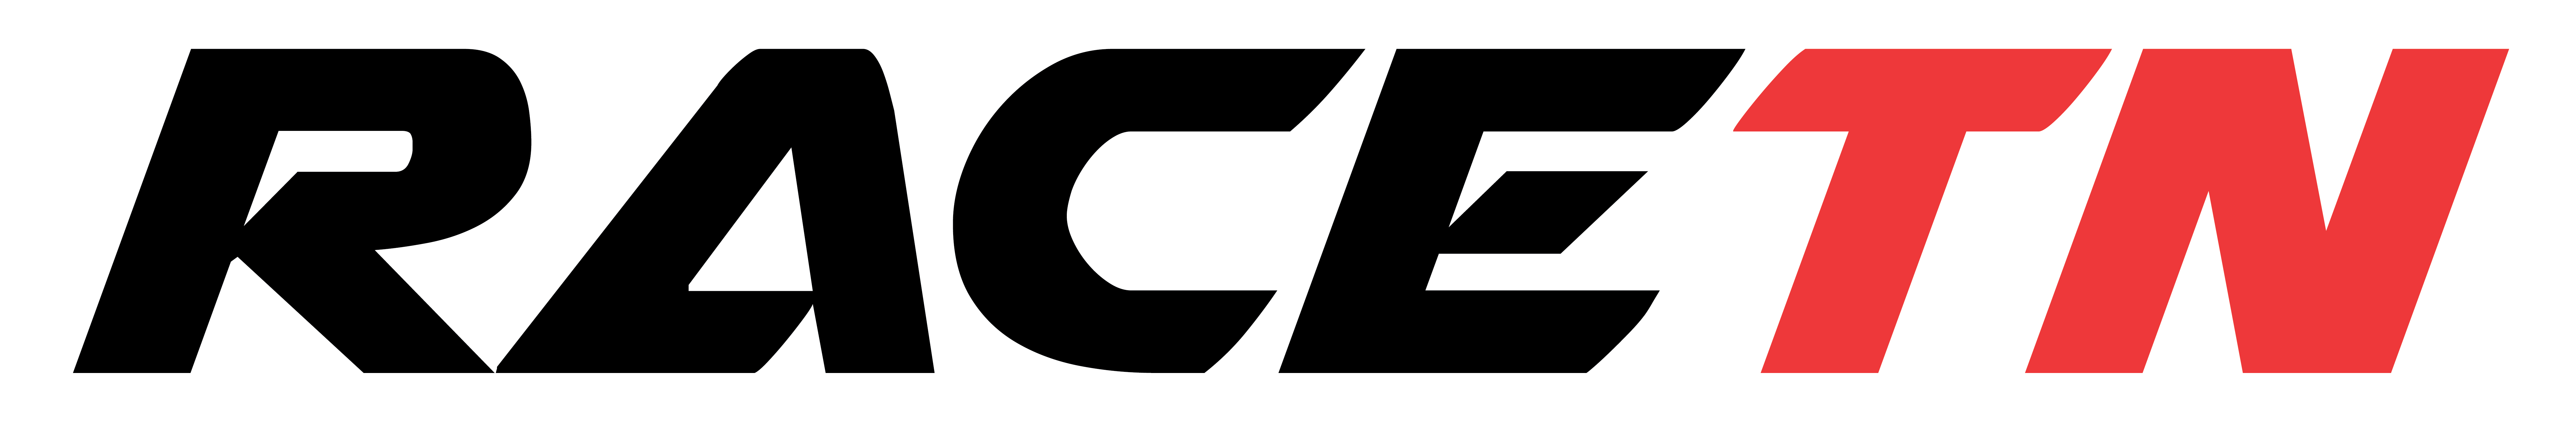 TN Logo - Home - Race Tennessee LLC|Race TN Series